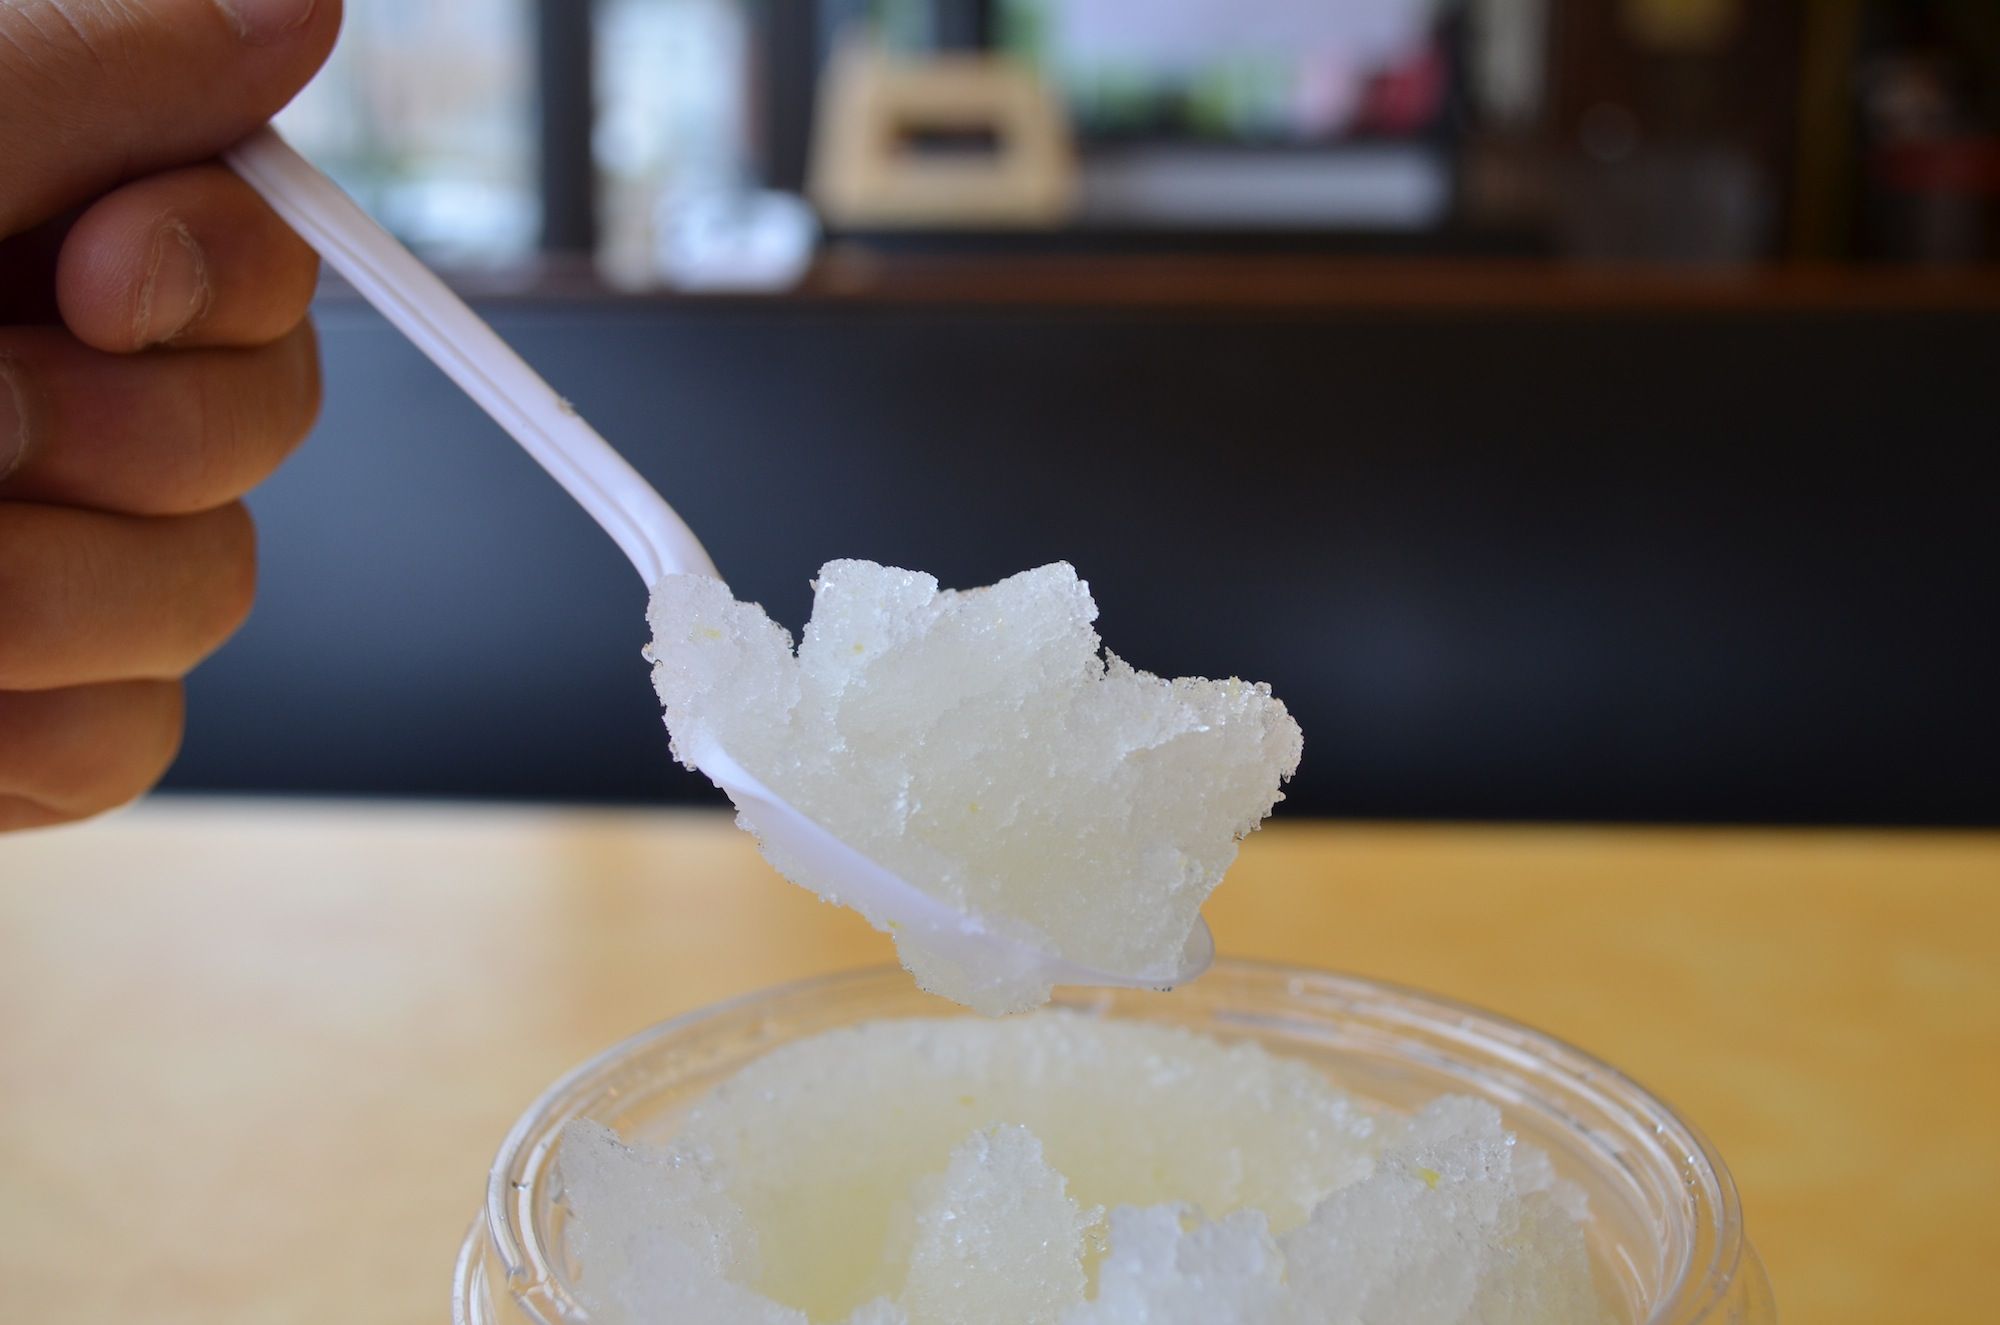 The lemon ice at Roll-N-Roaster. (Photo: Alex Ellefson / Sheepshead Bites)